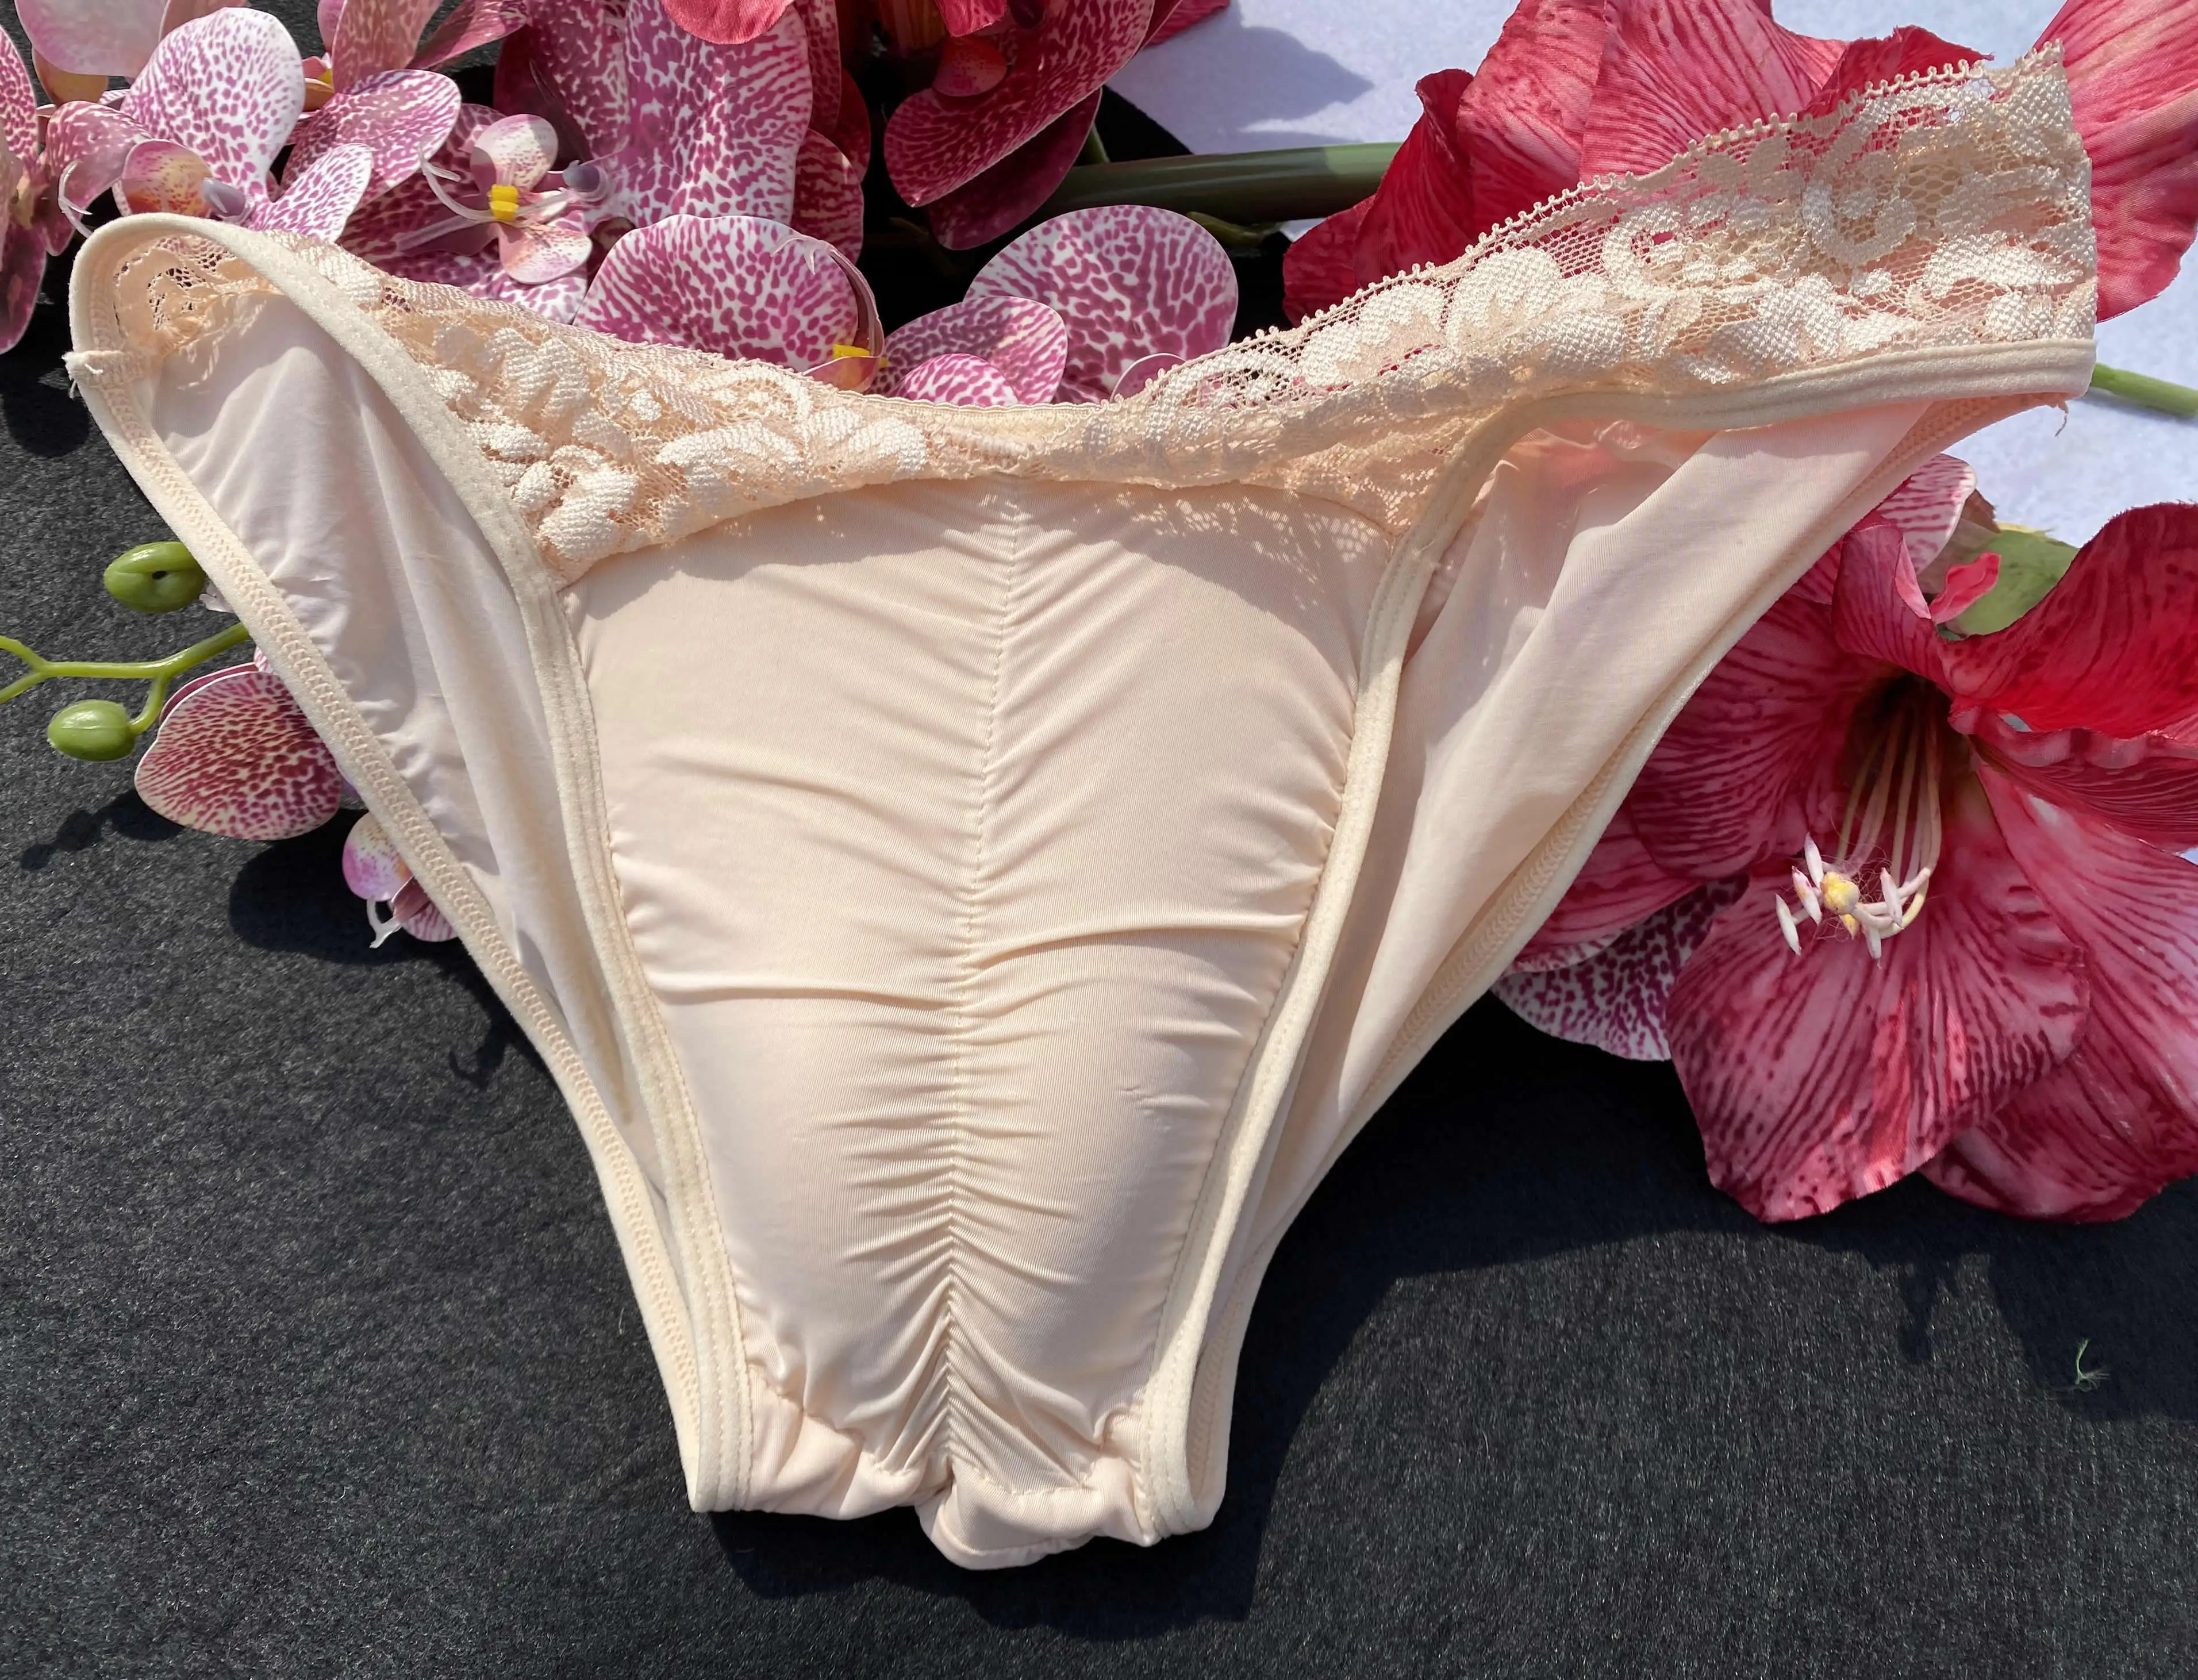 Silicone Camel Toe Panties Fake Vagina Underwear Insert Shemale